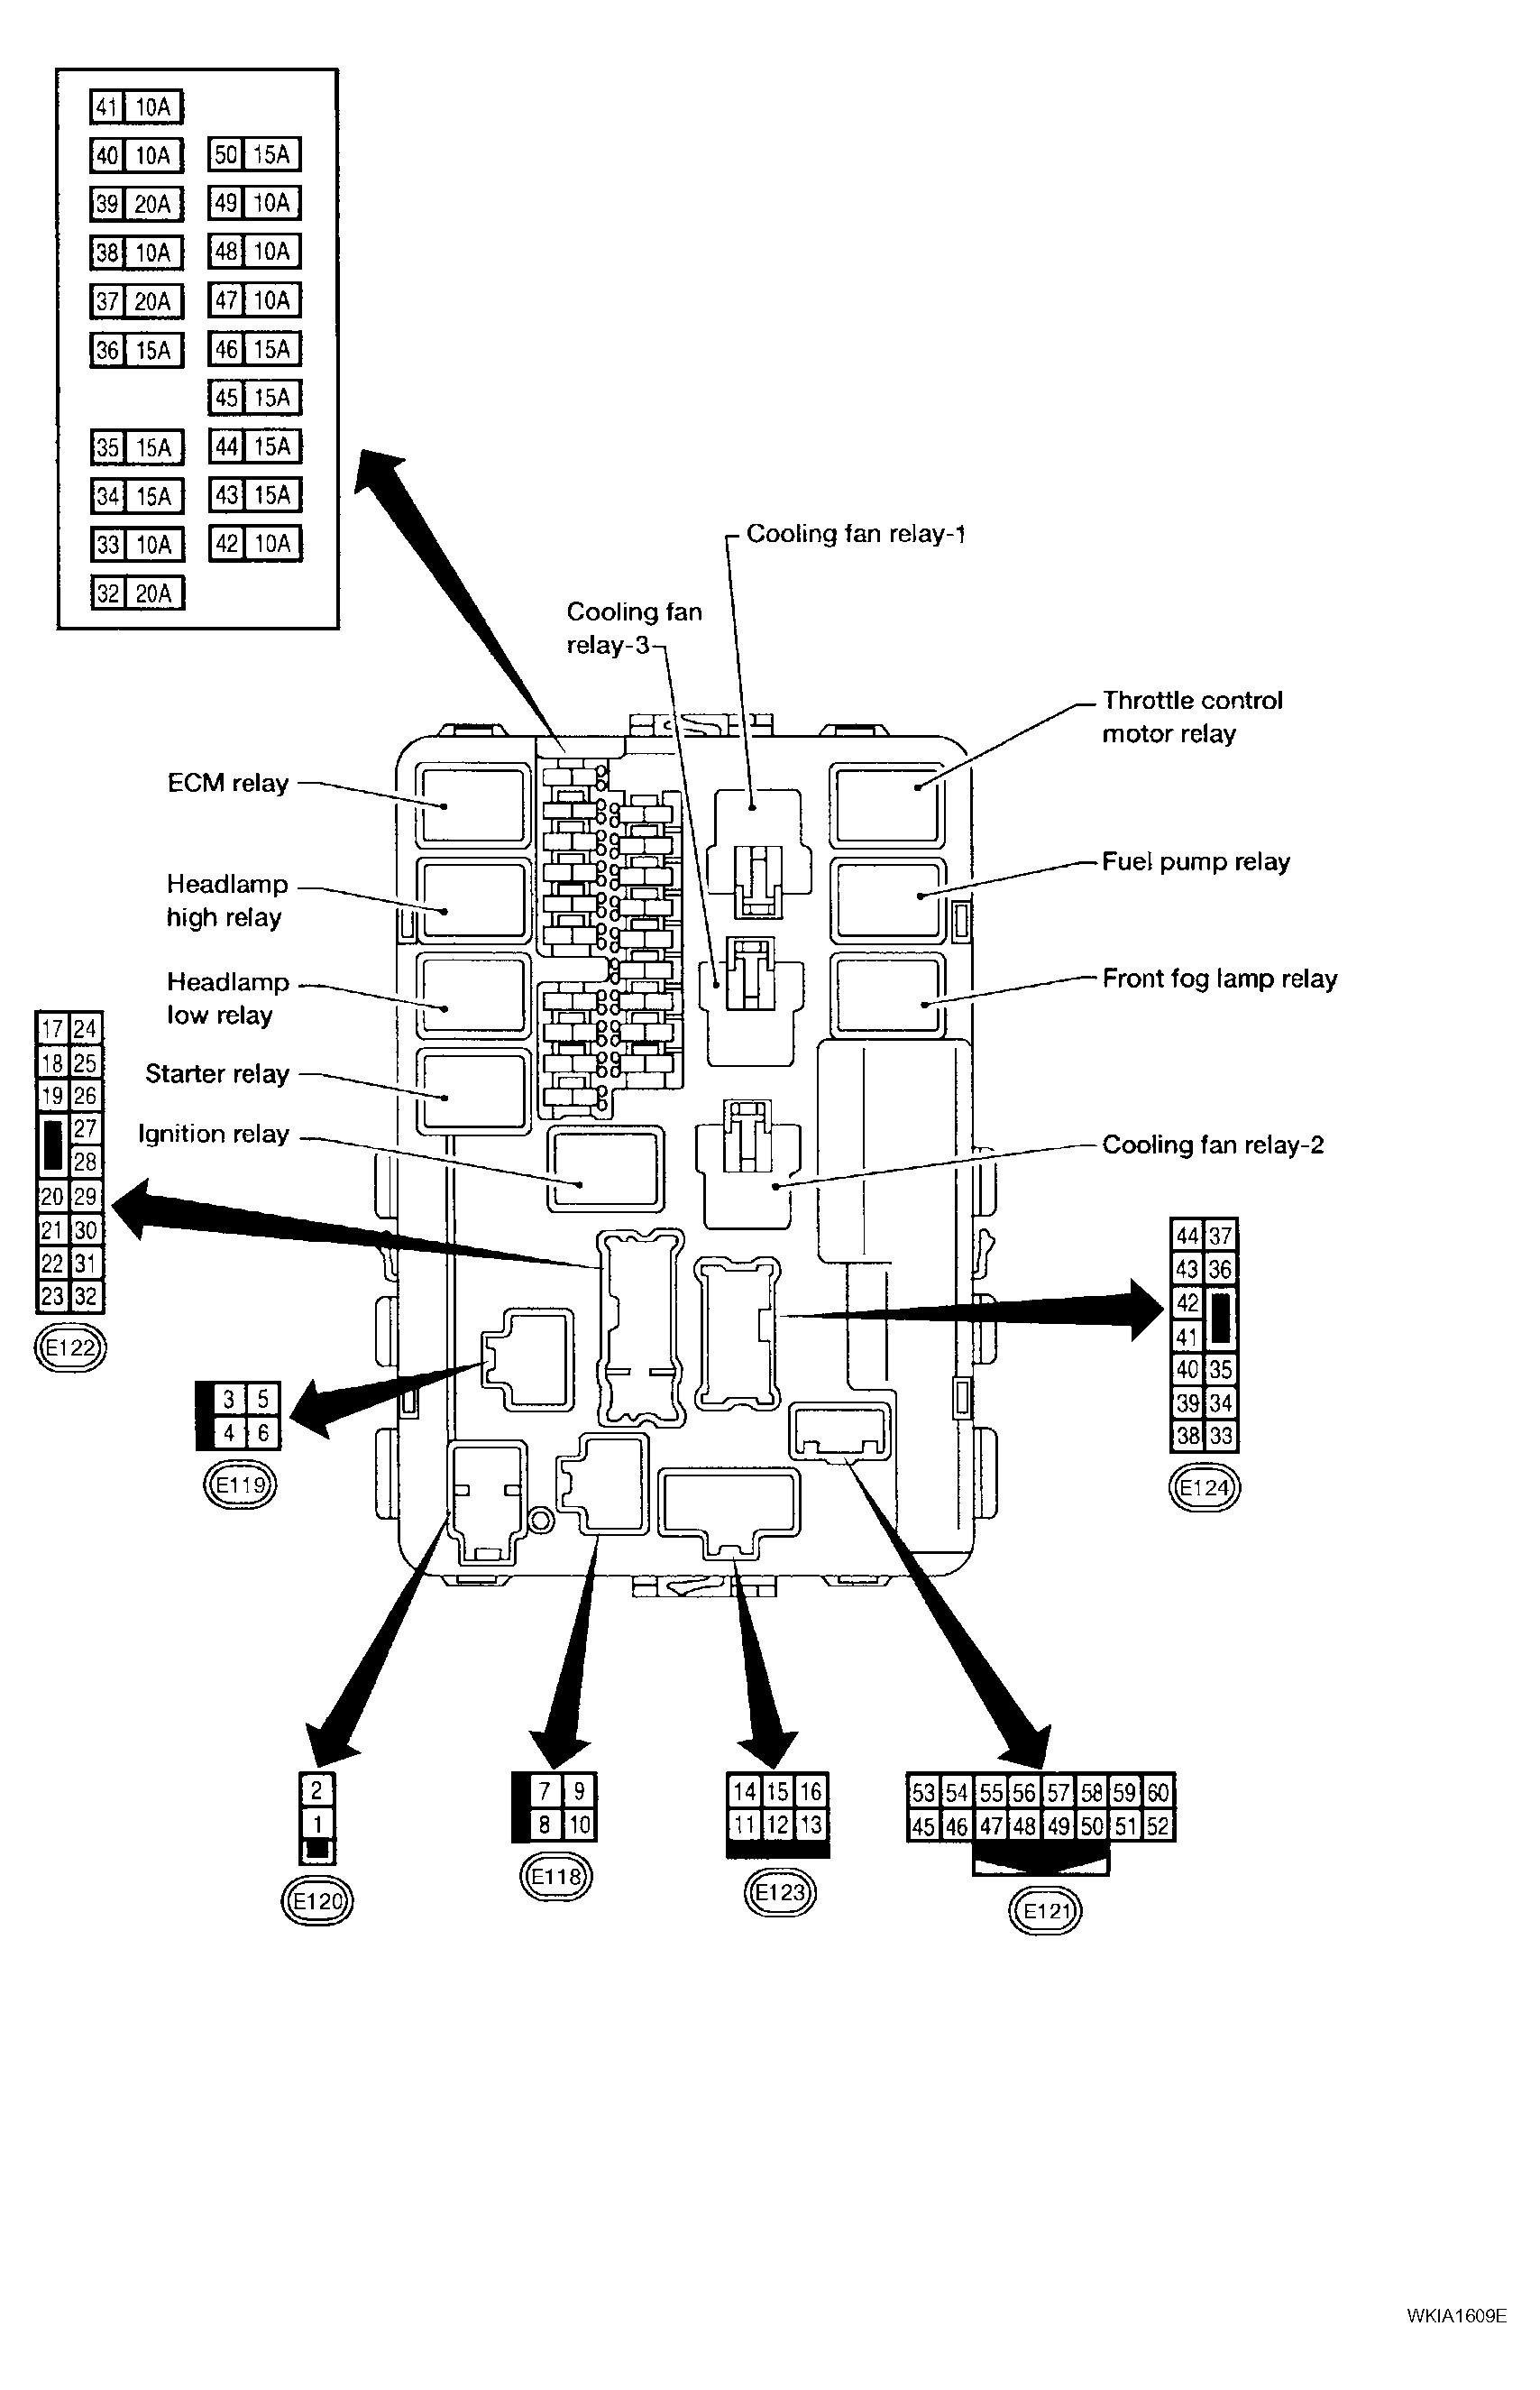 2002 Nissan Pathfinder Engine Diagram 2002 Nissan Xterra Radio Wiring Diagram Shahsramblings Of 2002 Nissan Pathfinder Engine Diagram